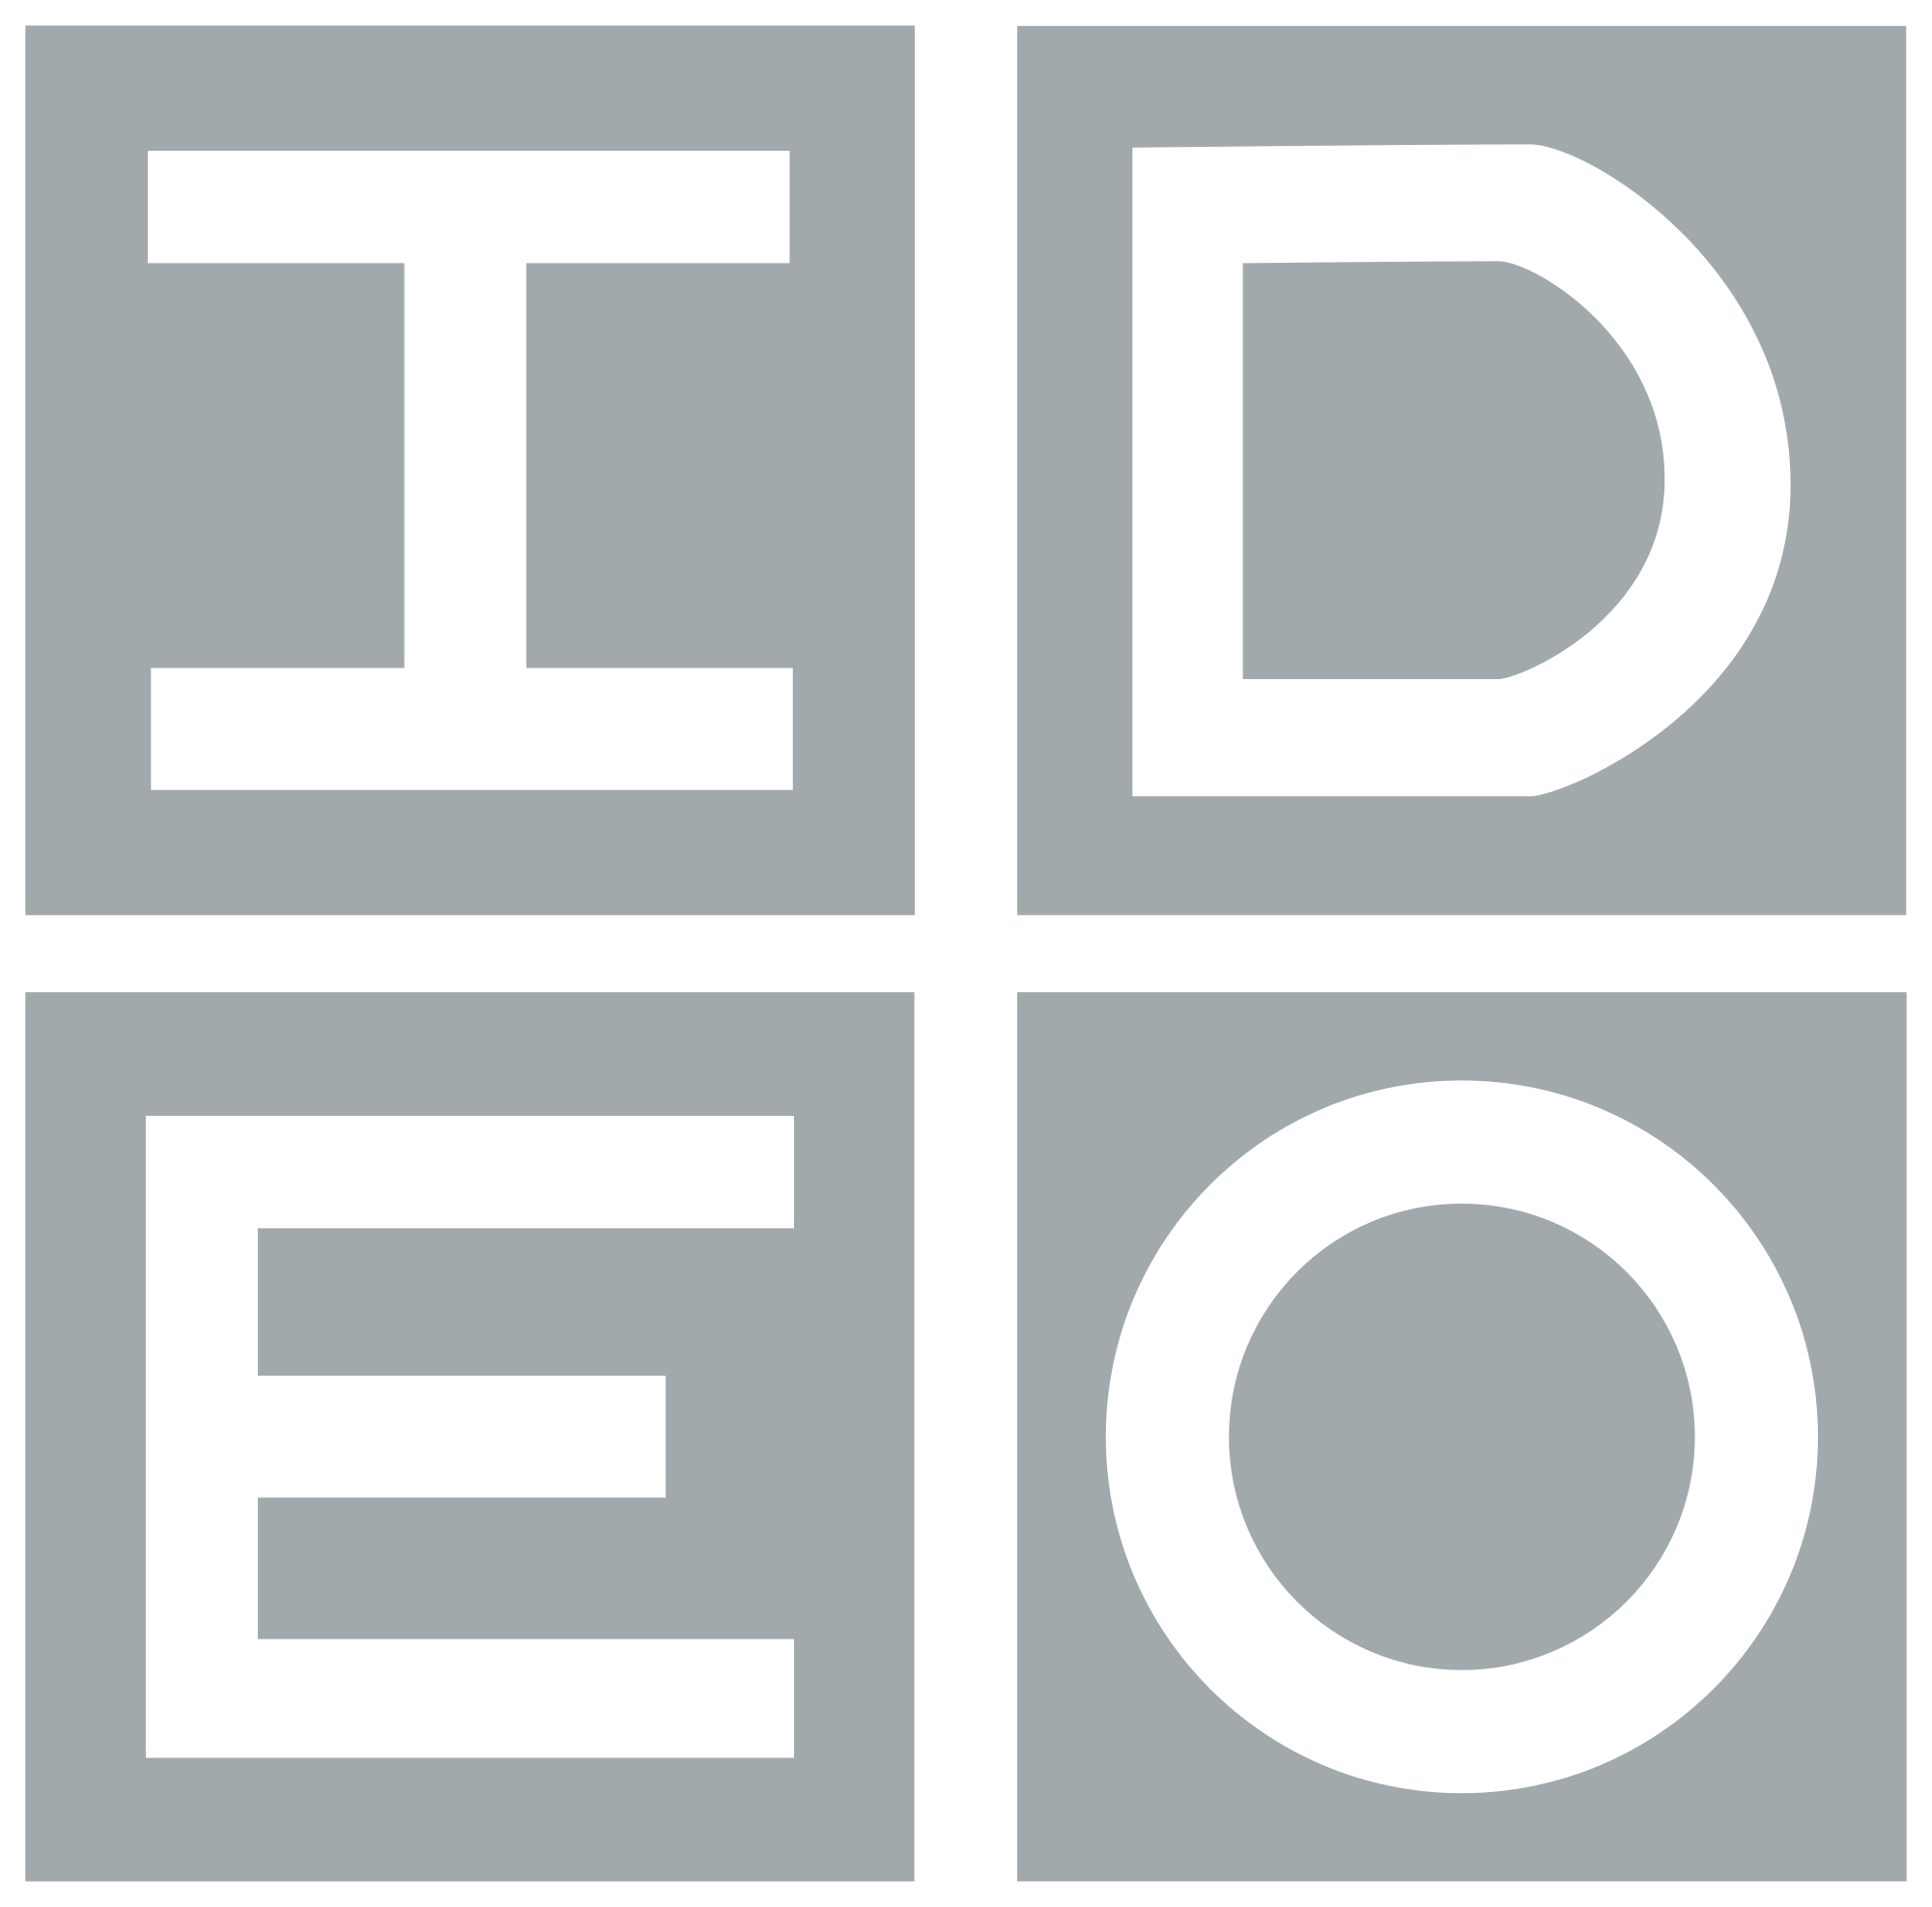 Ideo Logo - File:Ideo logo.svg - Wikimedia Commons